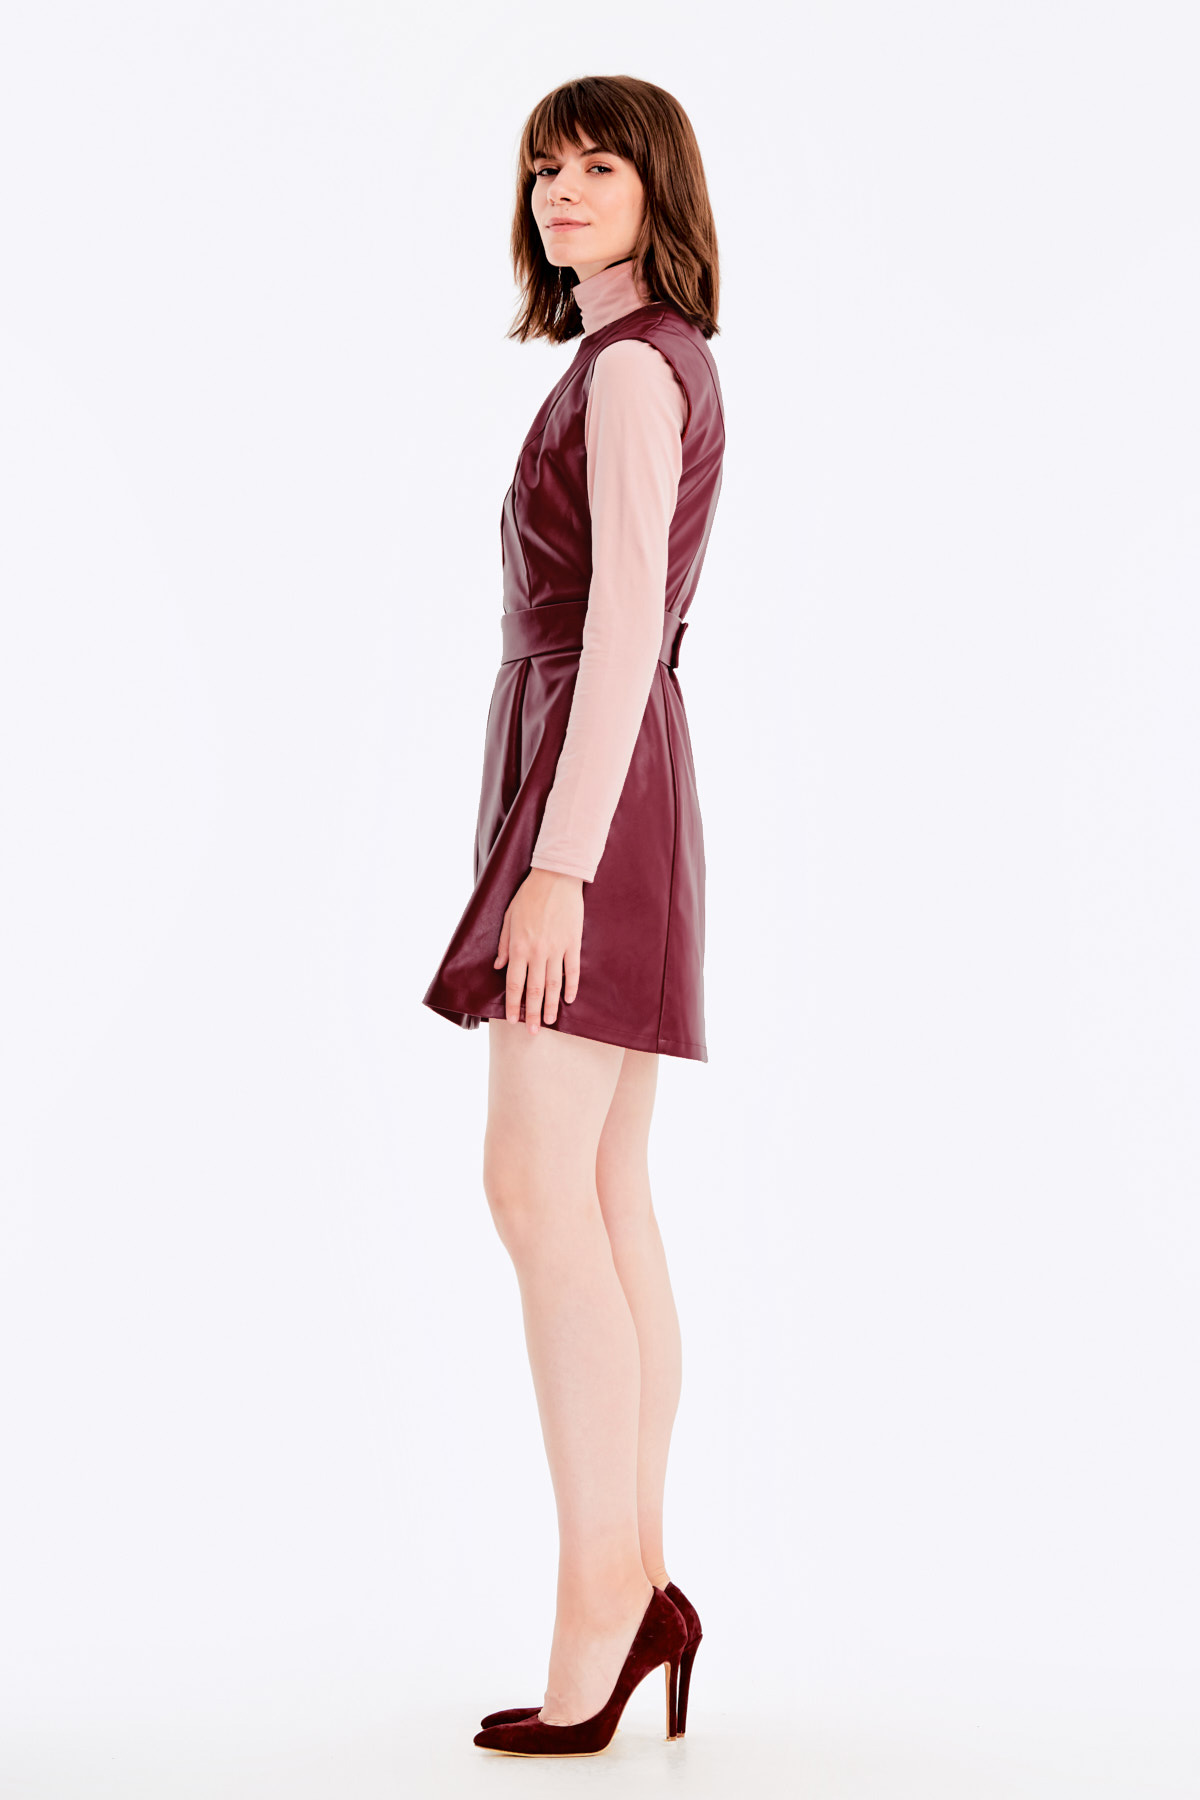 Below-knee burgundy leather dress , photo 11